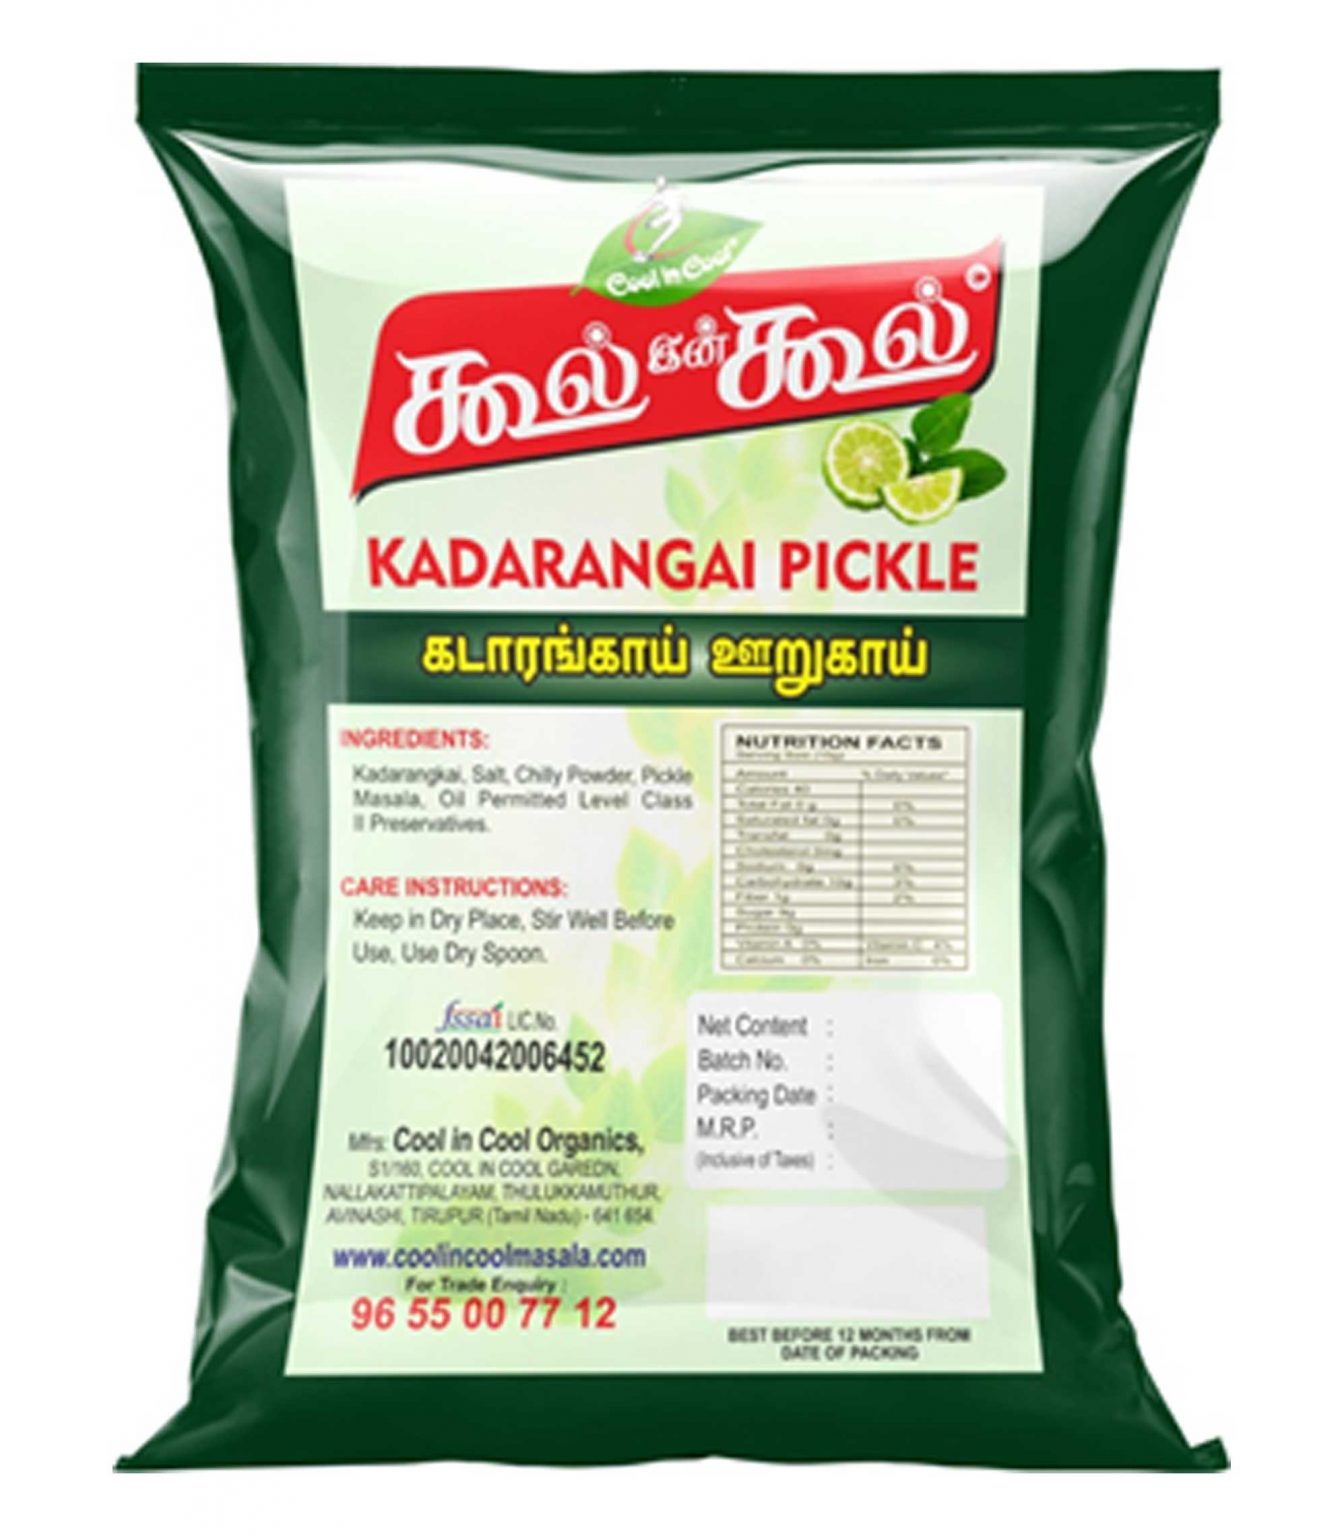 Kadarangkai Pickle - Cool in Cool Masala - Best Masala Products